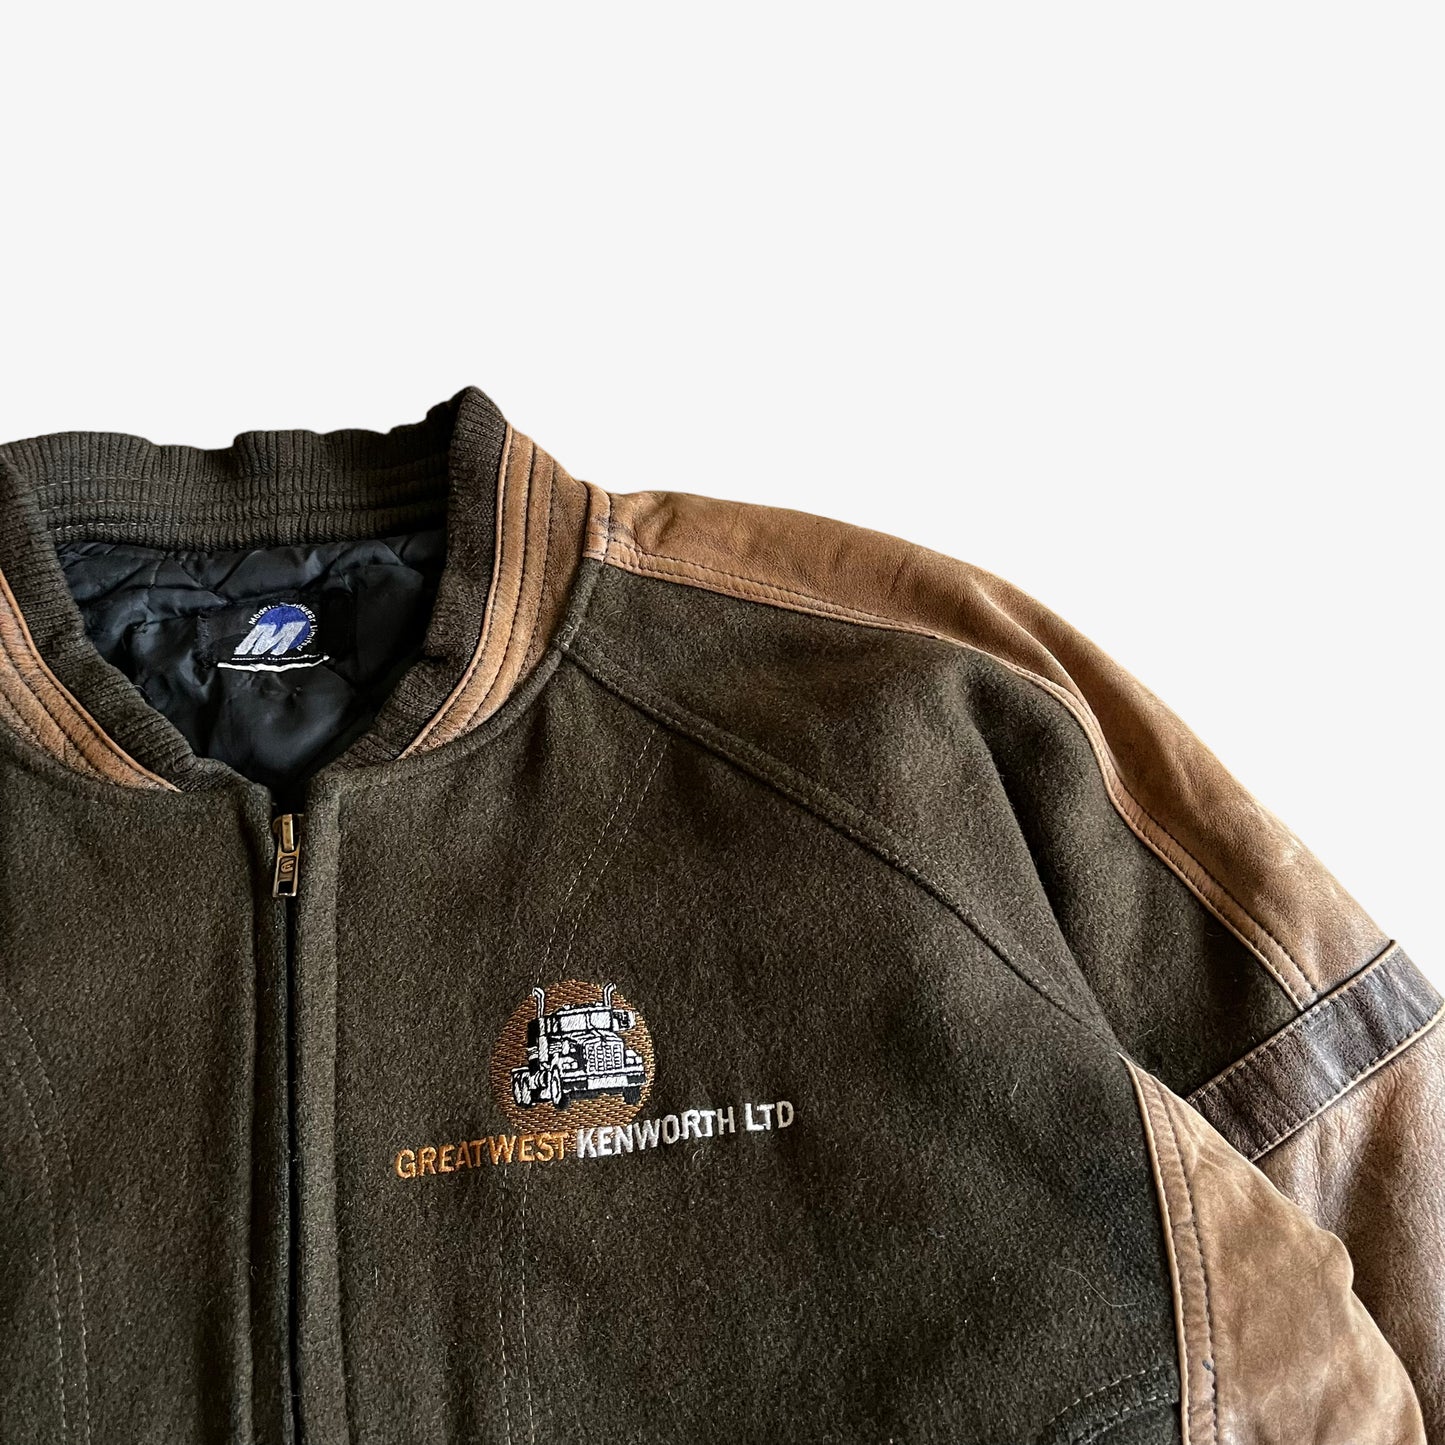 Vintage Greatwest Kenworth Ltd Leather Varsity Jacket Logo - Casspios Dream